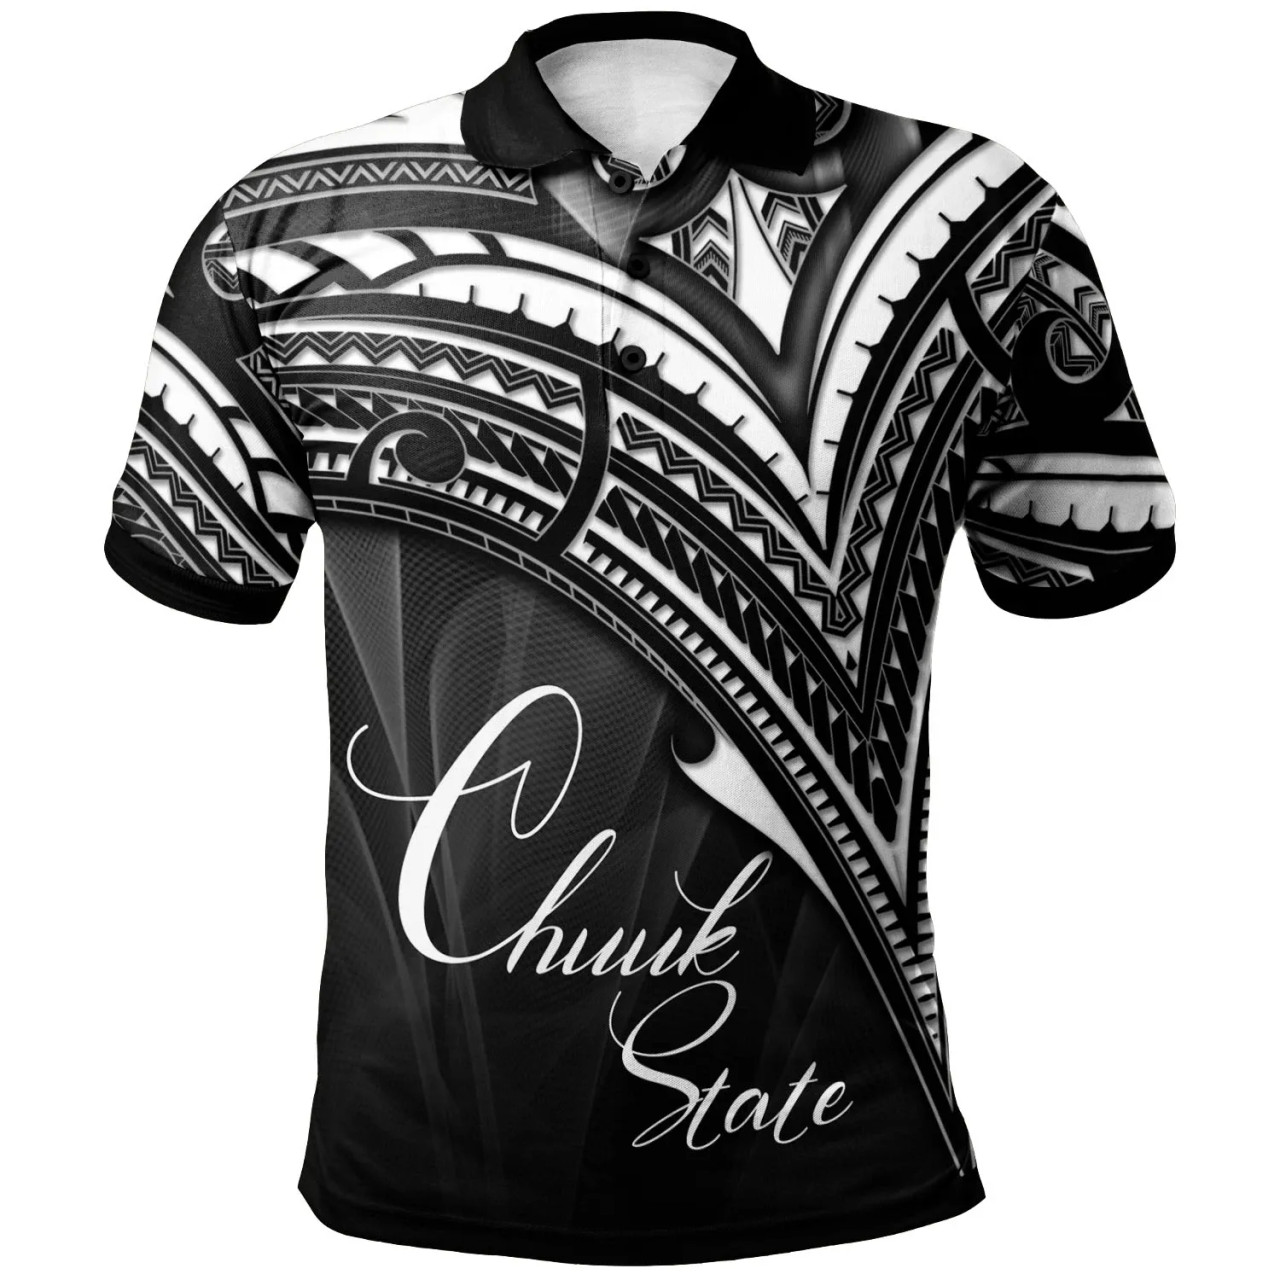 Chuuk State Polo Shirt - Cross Style 1